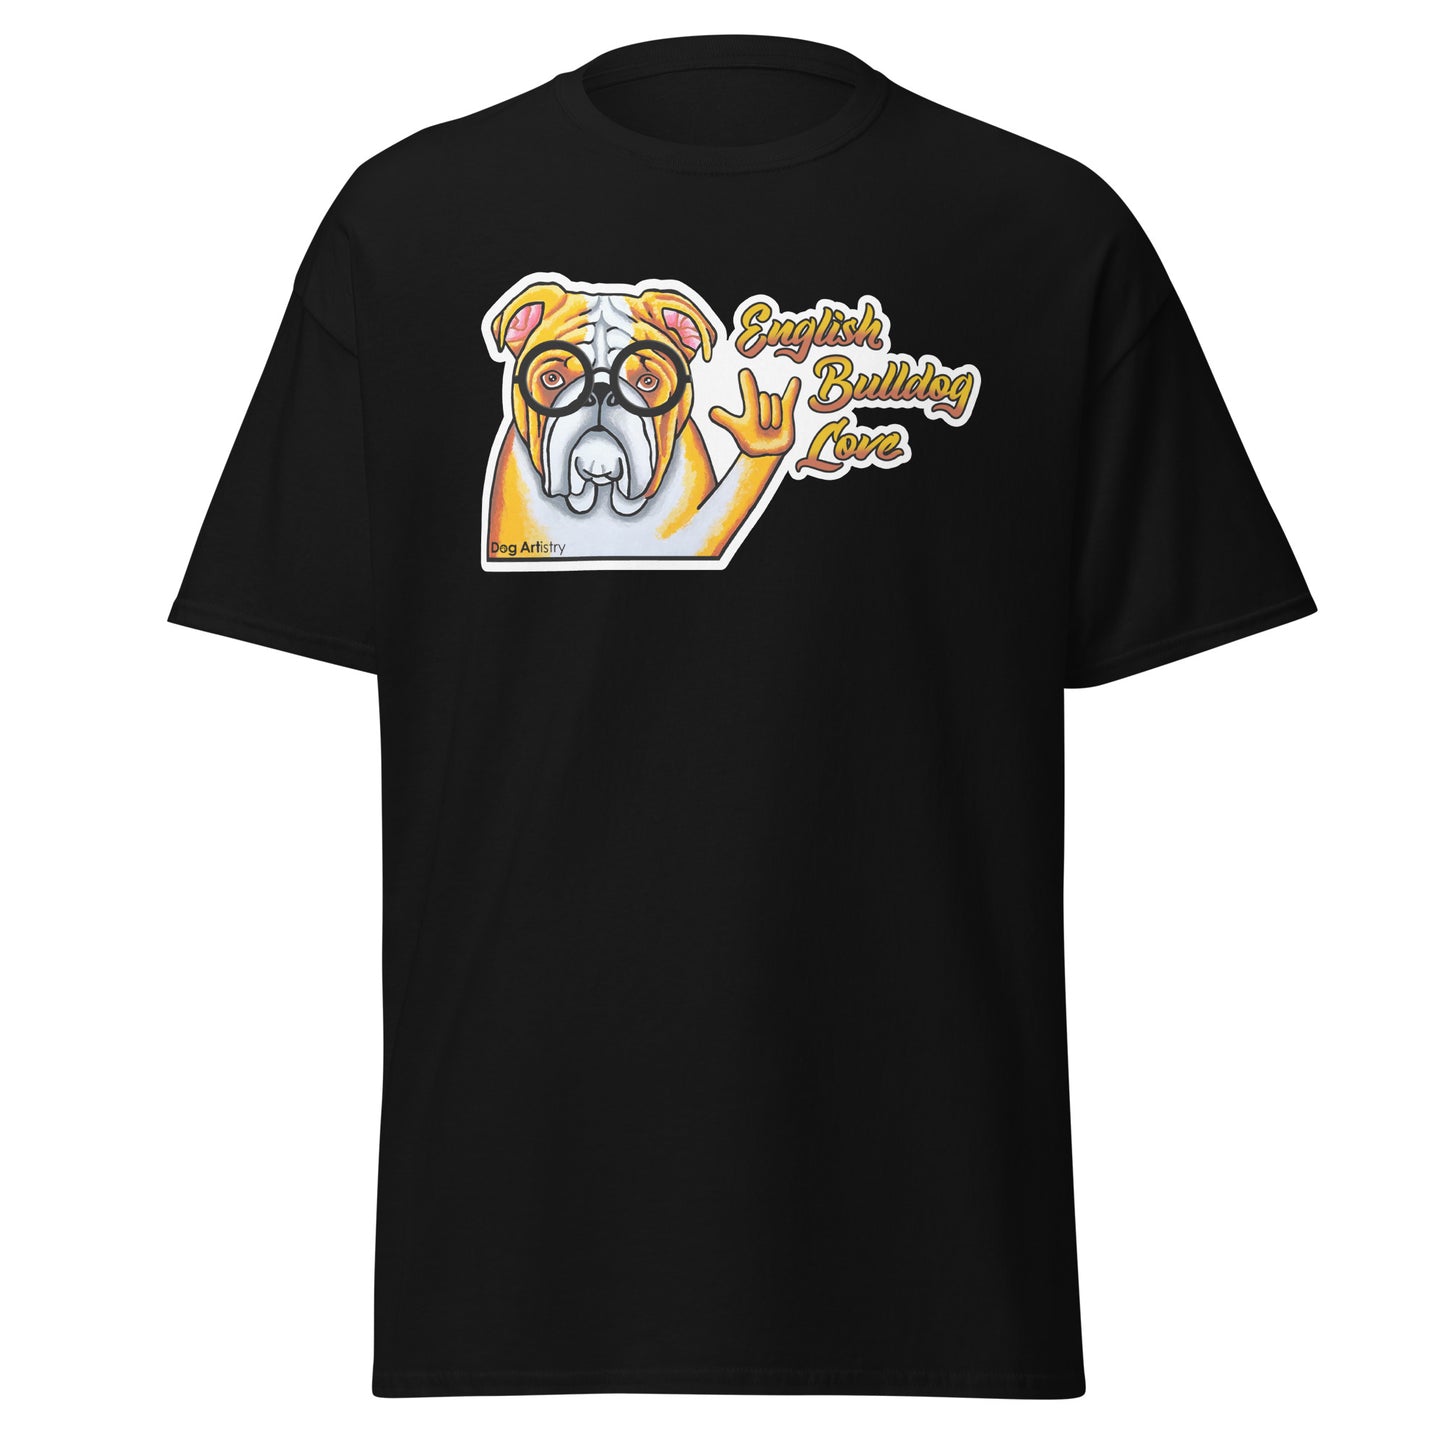 English Bulldog Love men's t-shirt black by Dog Artistry